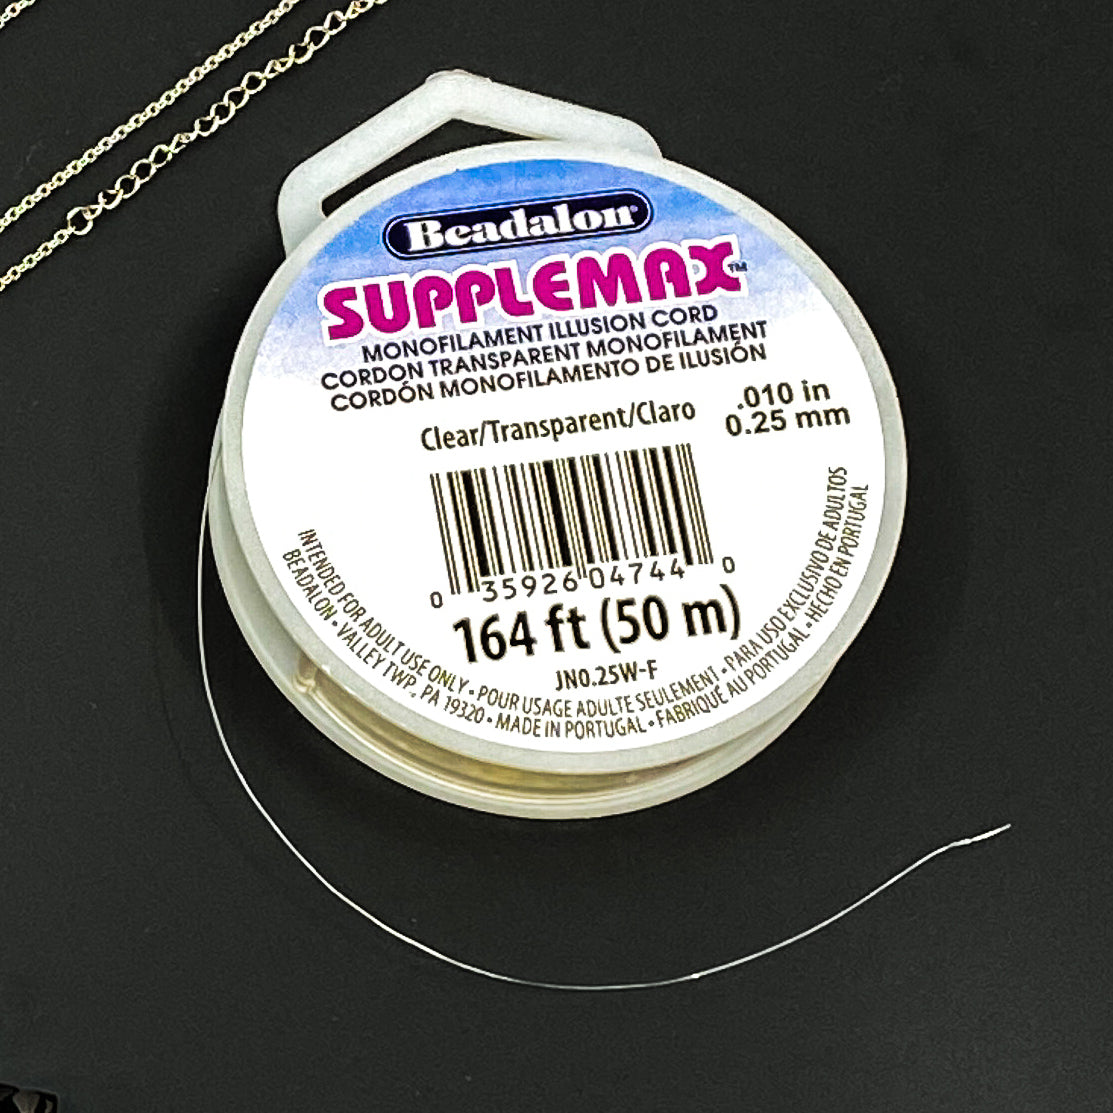 .010" Supplemax Illusion Cord - 50 meter spool